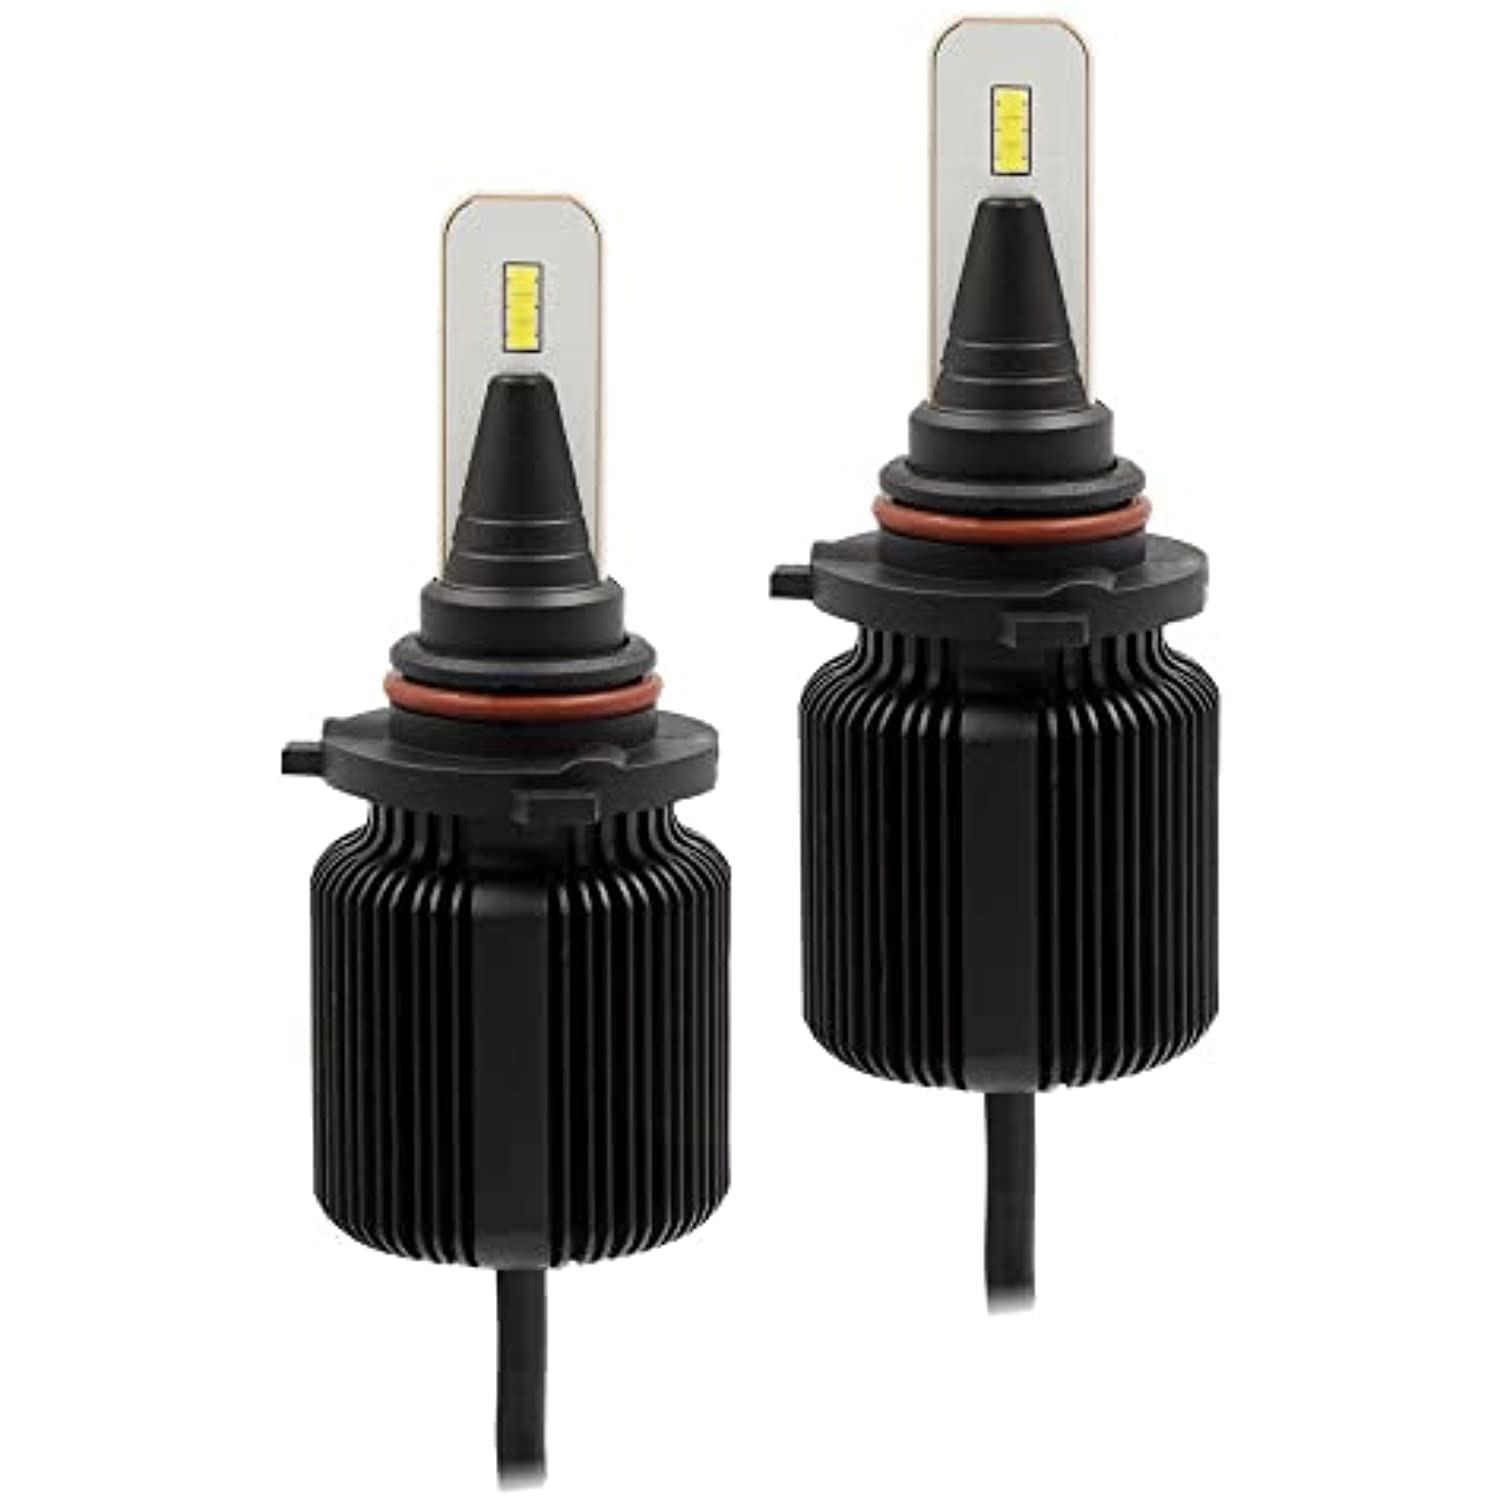 Daytona Lights - H10 Replacement LED bulb set (DL-H10)